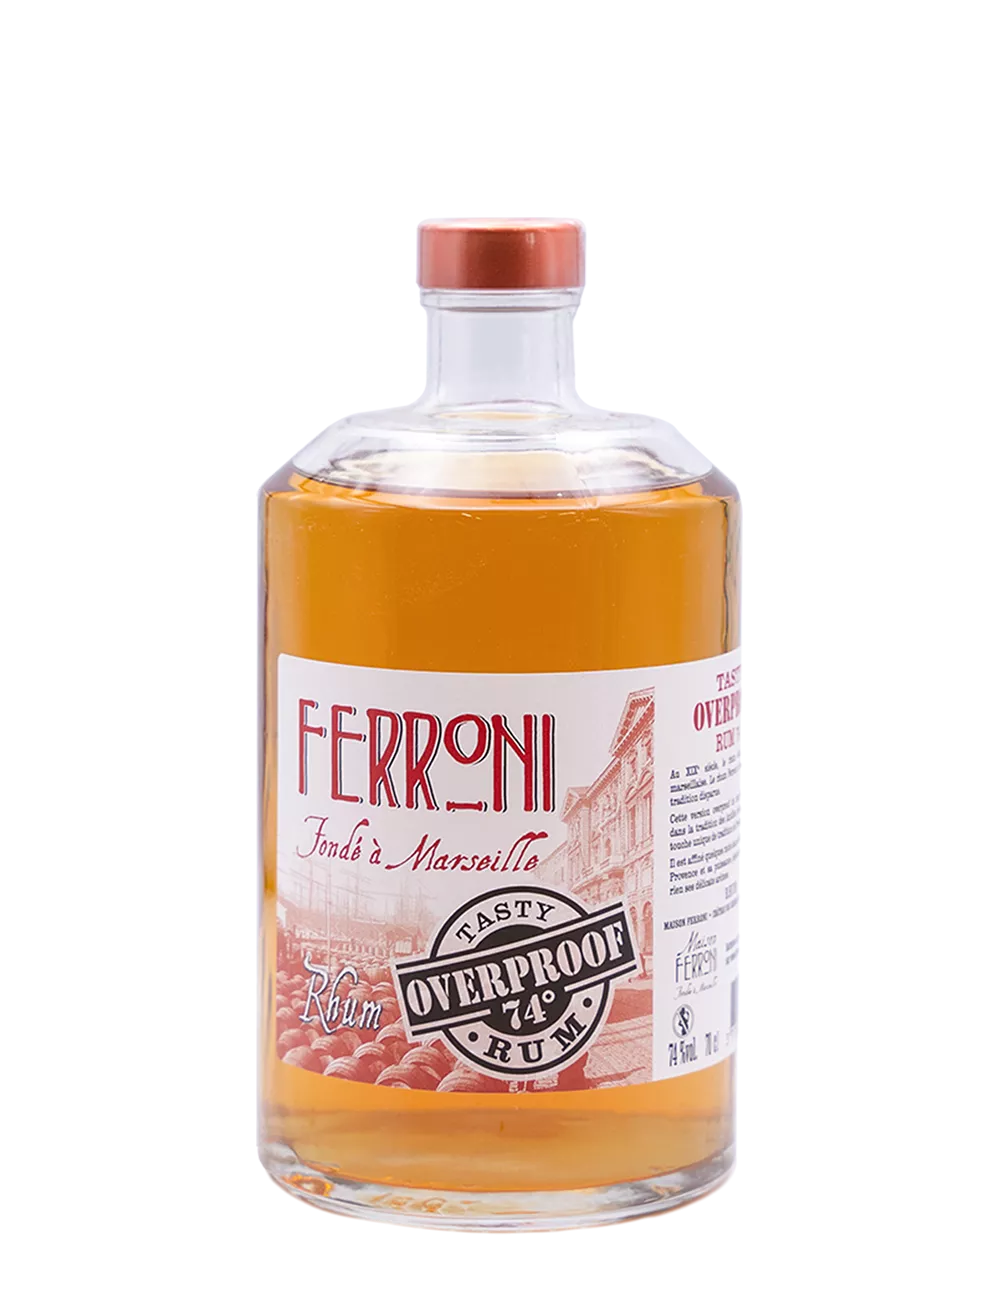 Ferroni - Tasty Overproof - Rhum vieux de mélasse